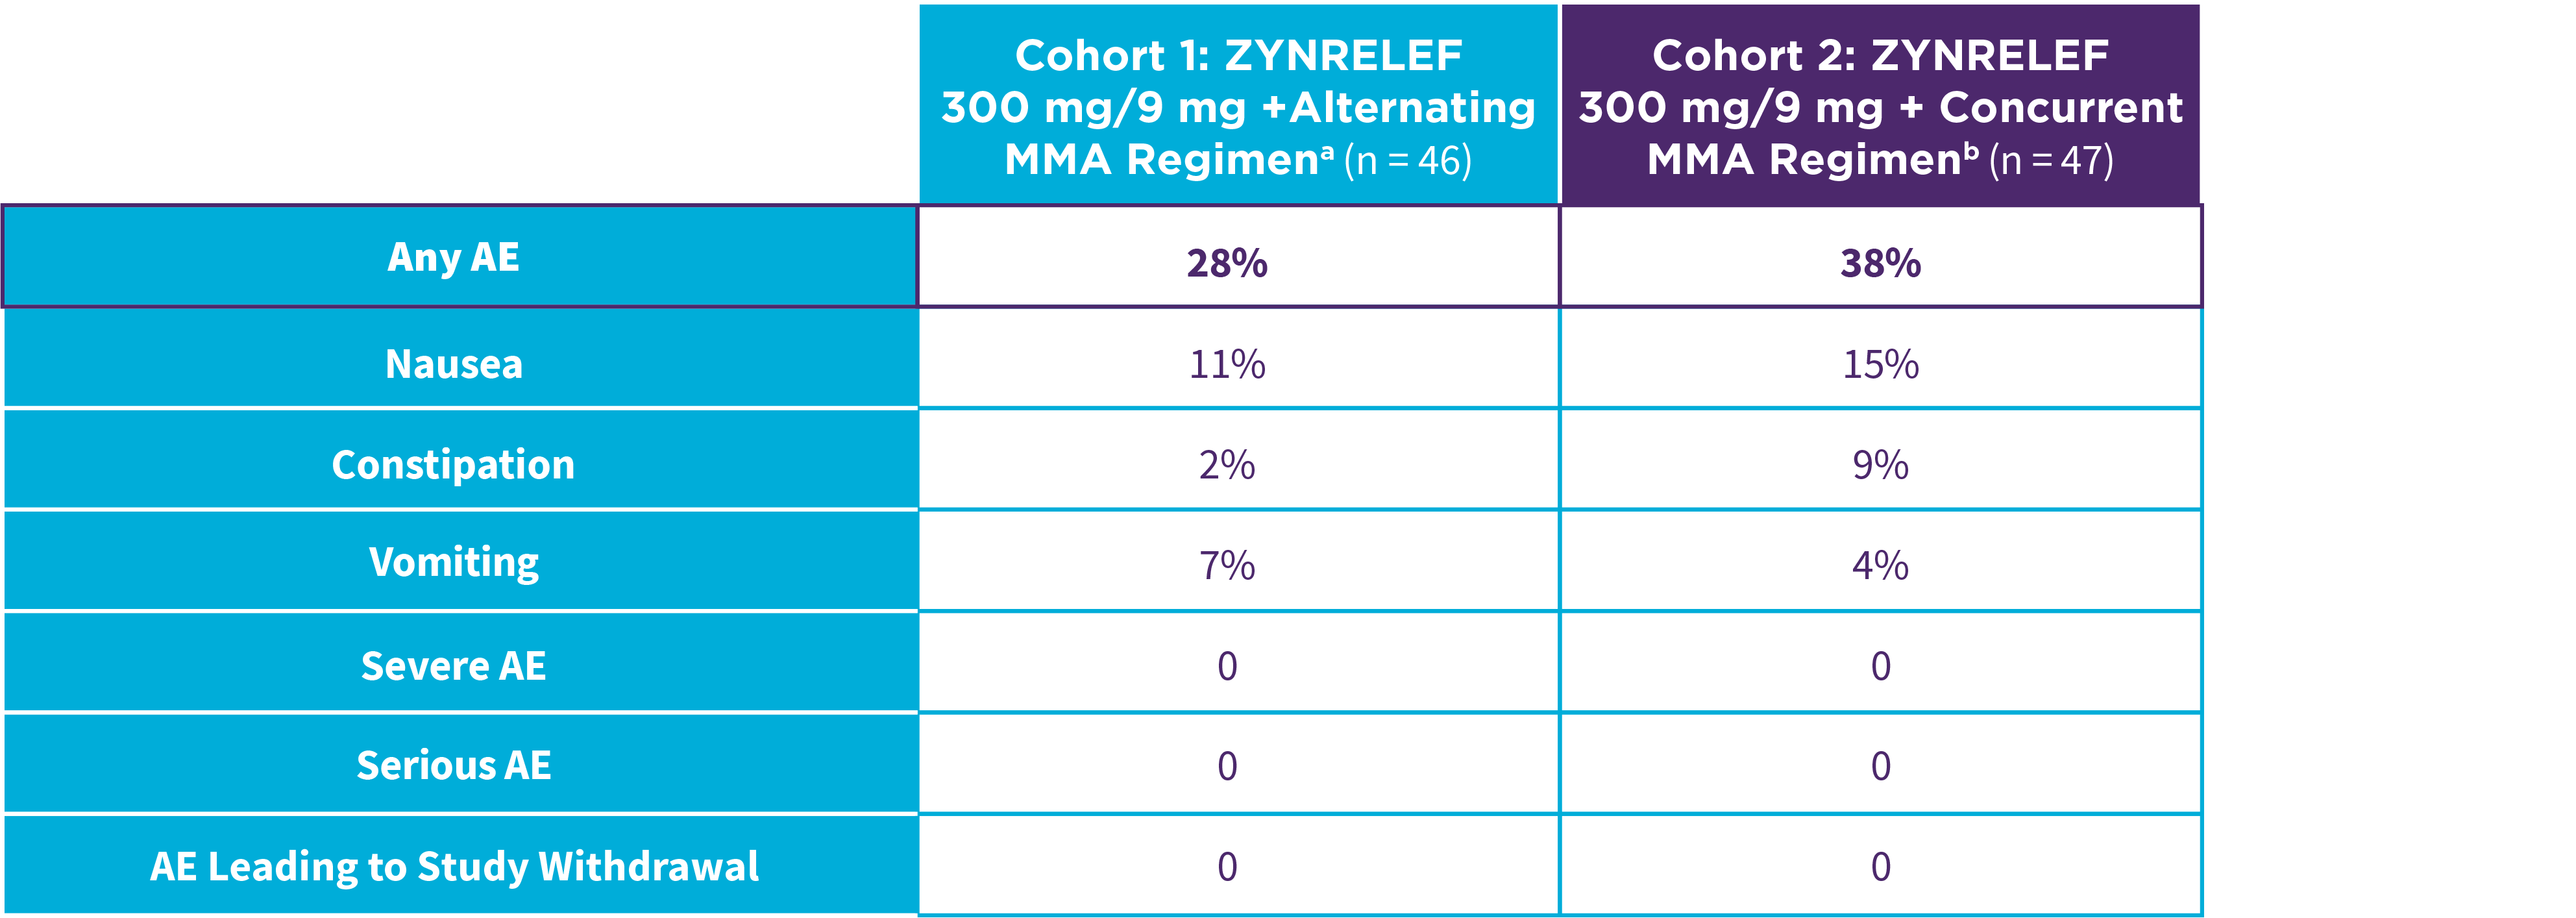 Table: treatment-emergent adverse events comparing ZYNRELEF + alternating MMA regimen and ZYNRELEF + concurrent MMA regimen.